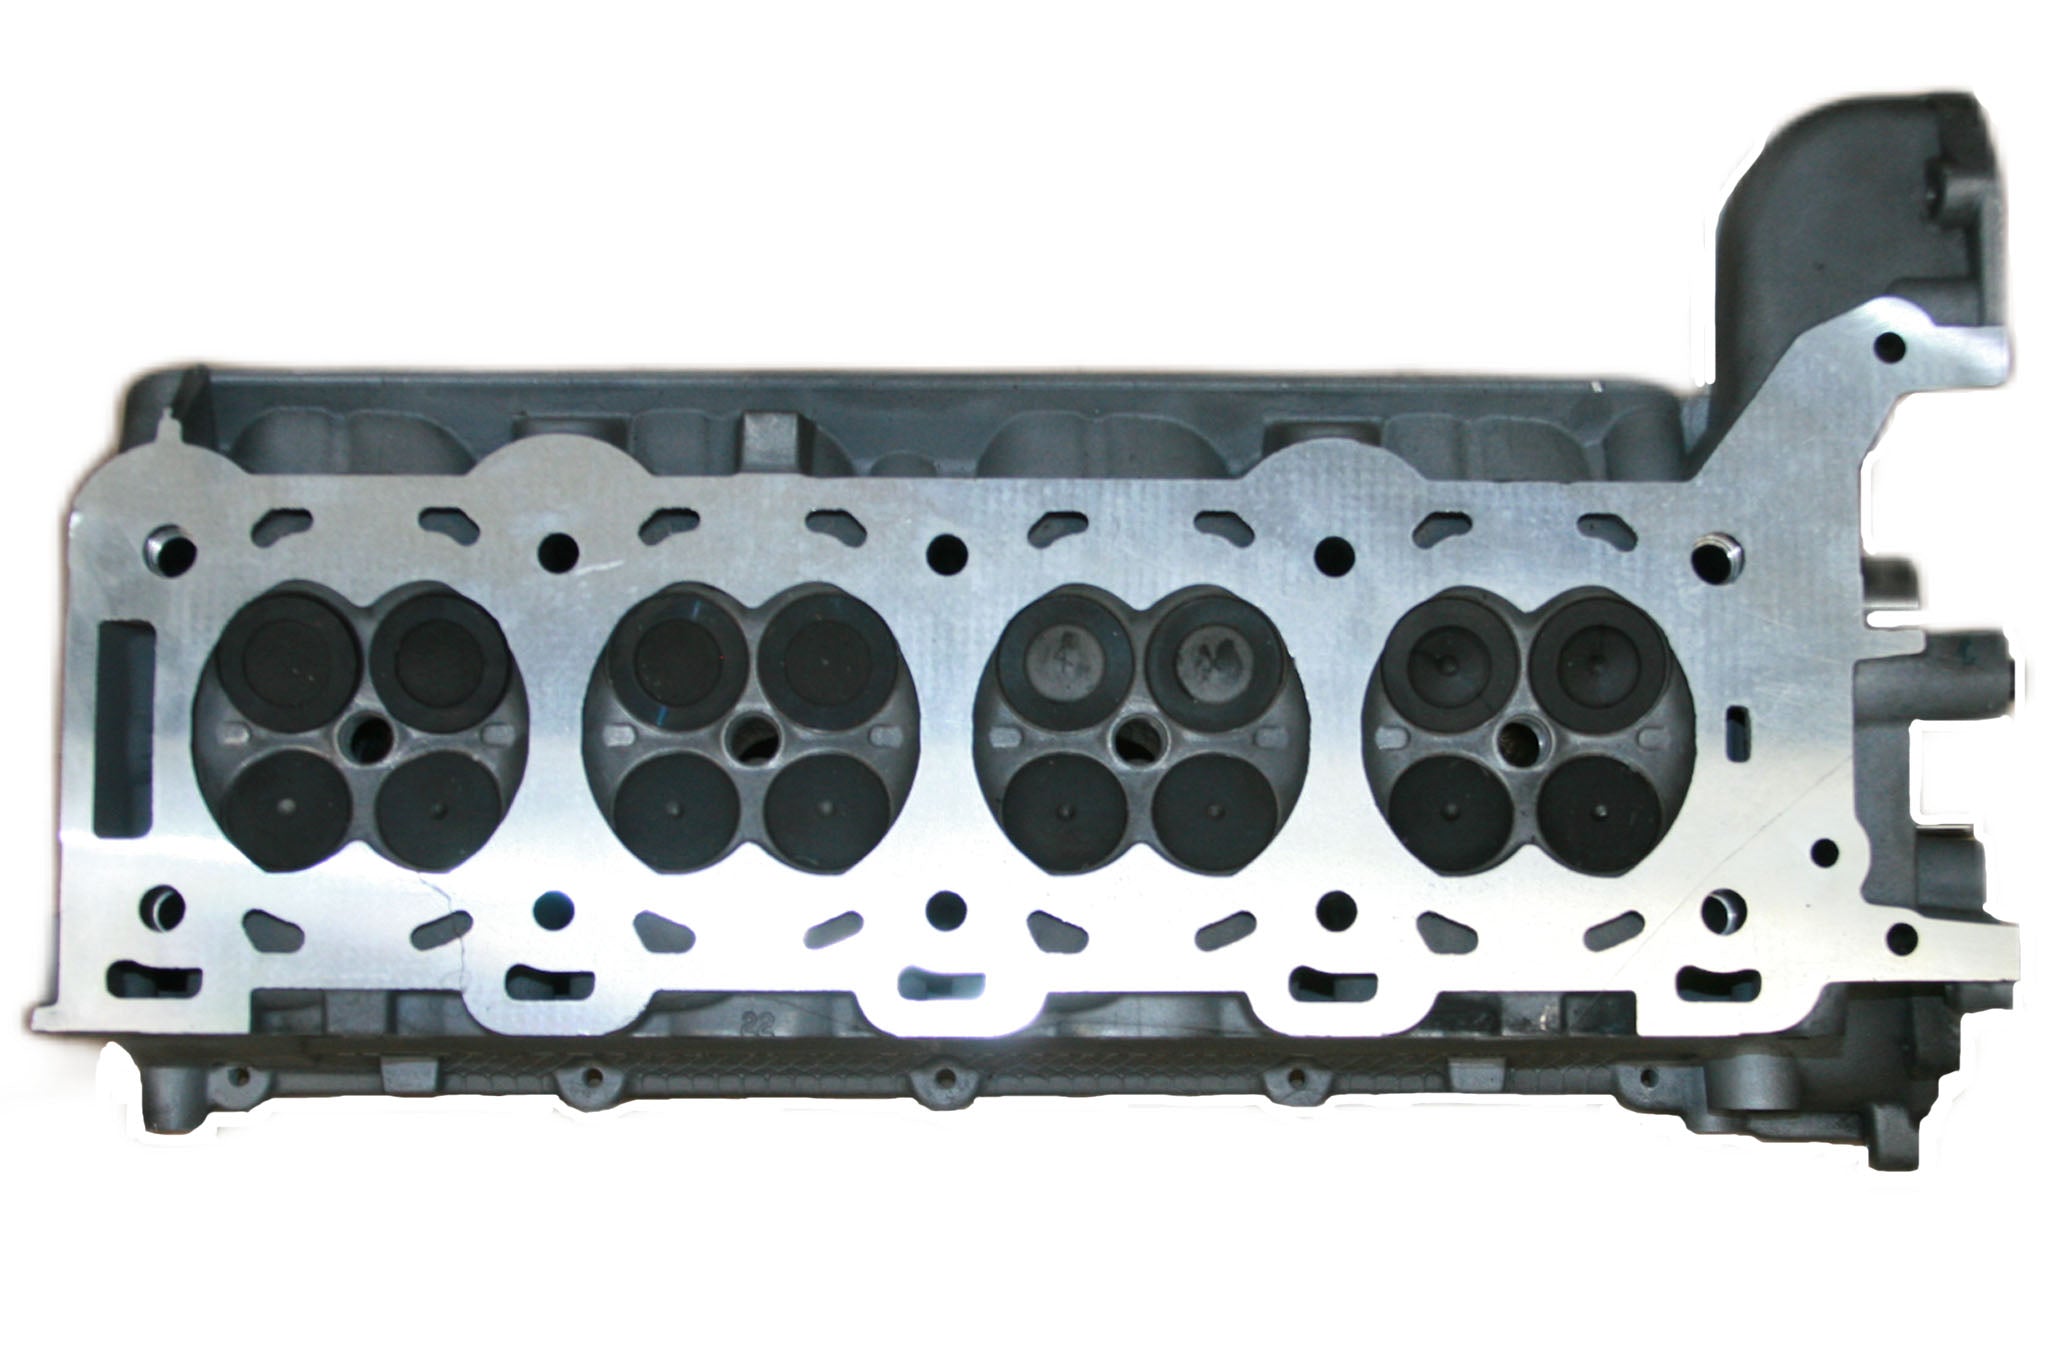 2003-2008 Land Rover 4.4L M62 Left Rebuilt Cylinder Head Casting # RF-4H236C064AD